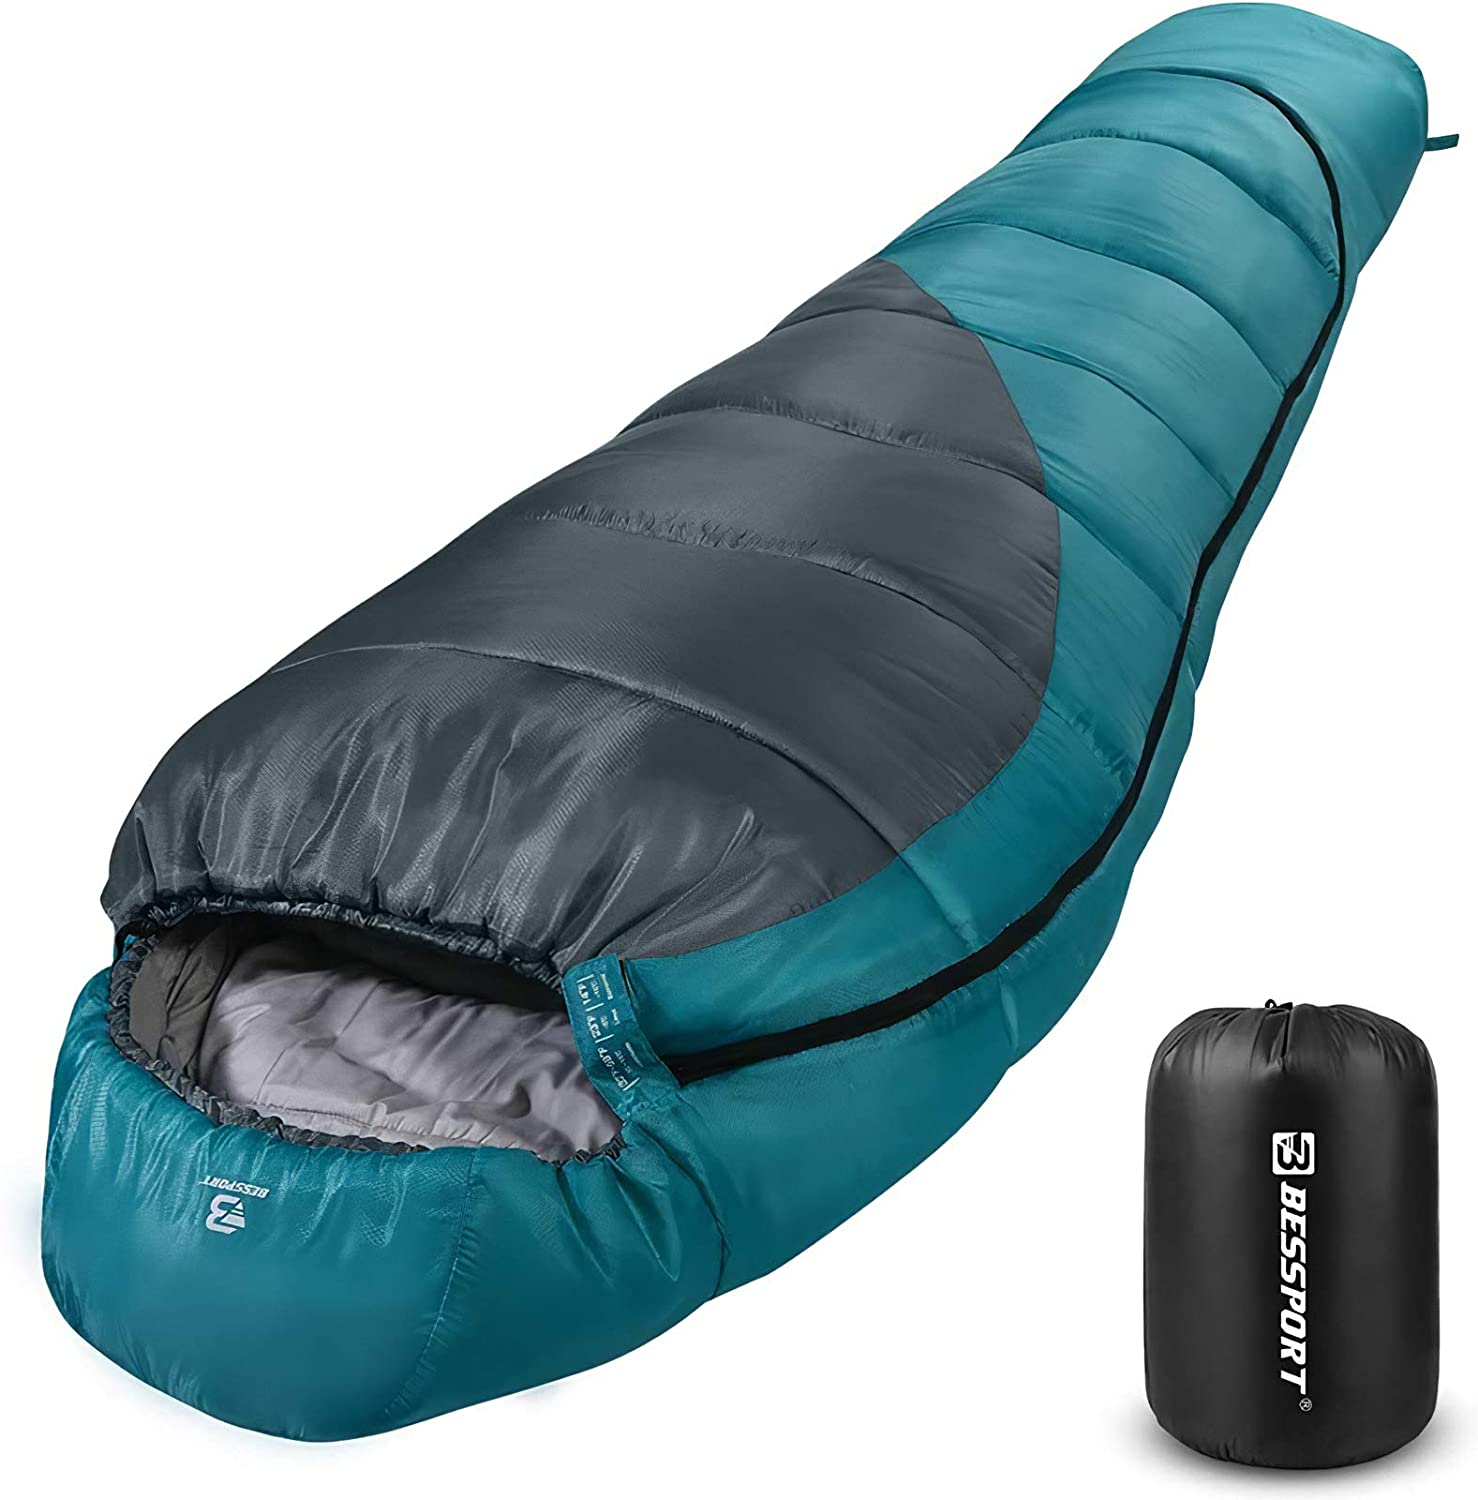 Camping sobres saco de dormir momia Saco de dormir mantas para dormir saco tiendas de campaña 210x75cm 